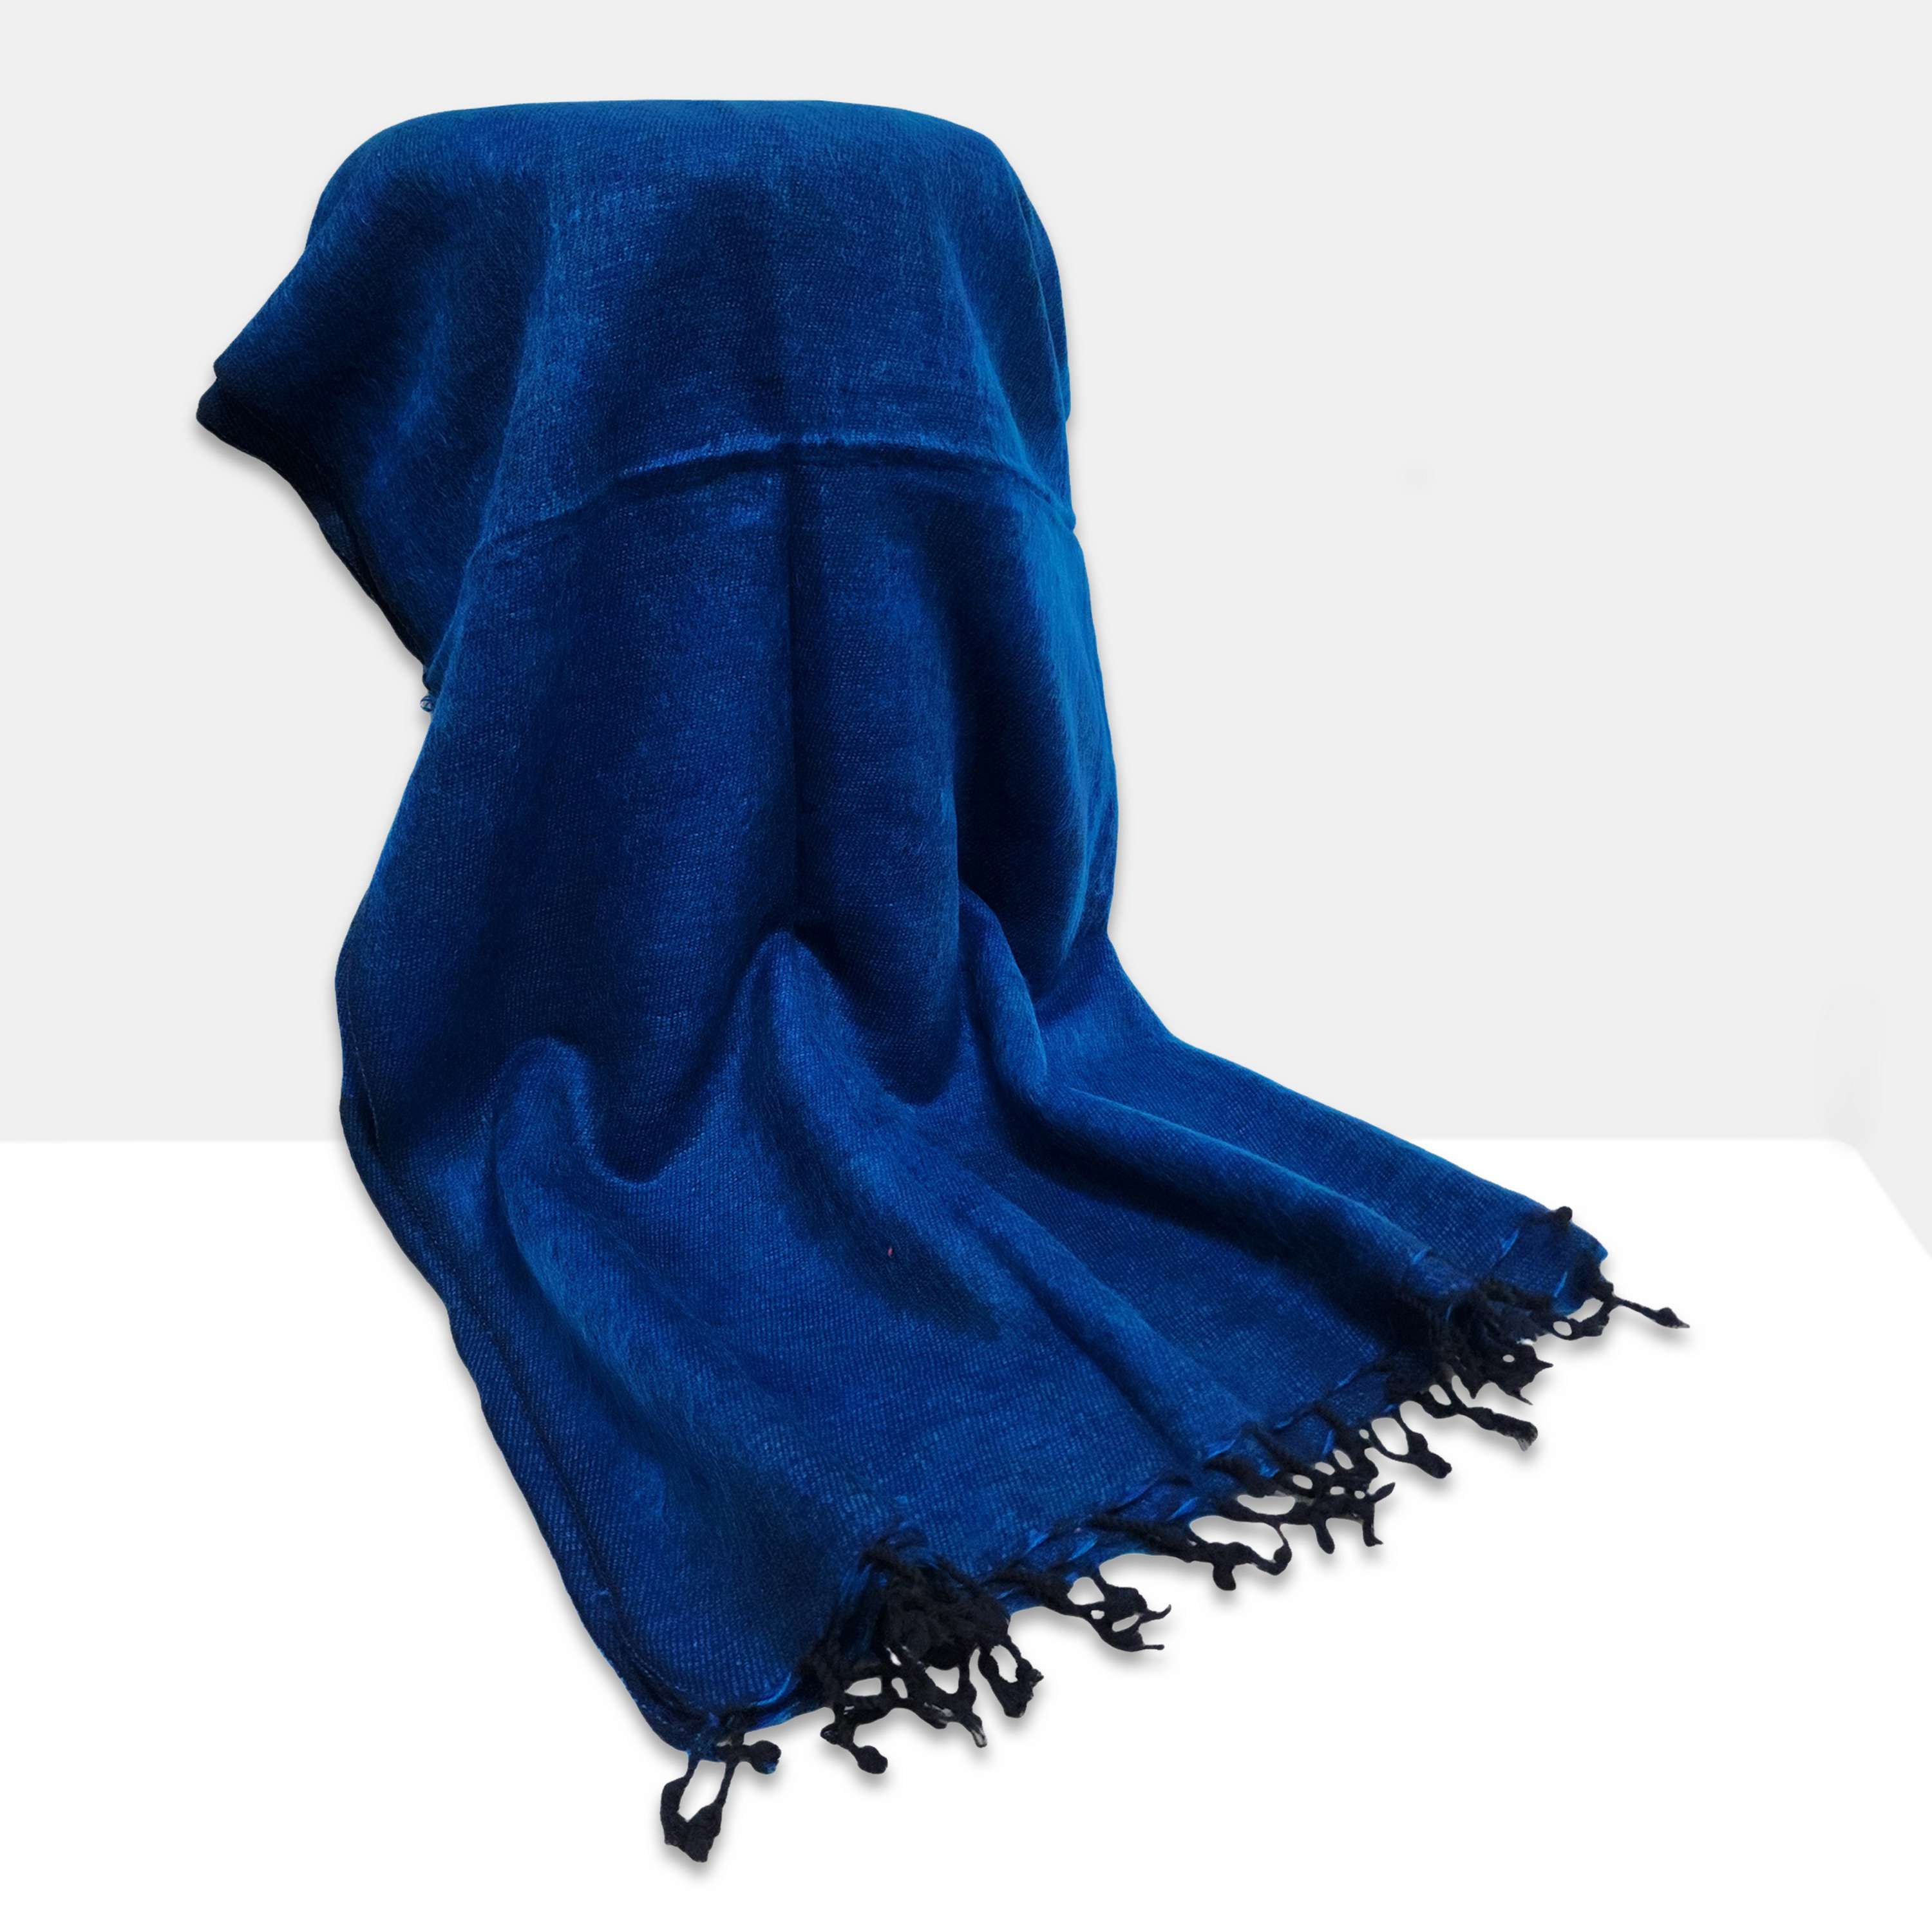 Yak Wool Blanket, Nepali Acrylic Hand Loom Blanket, Color blue